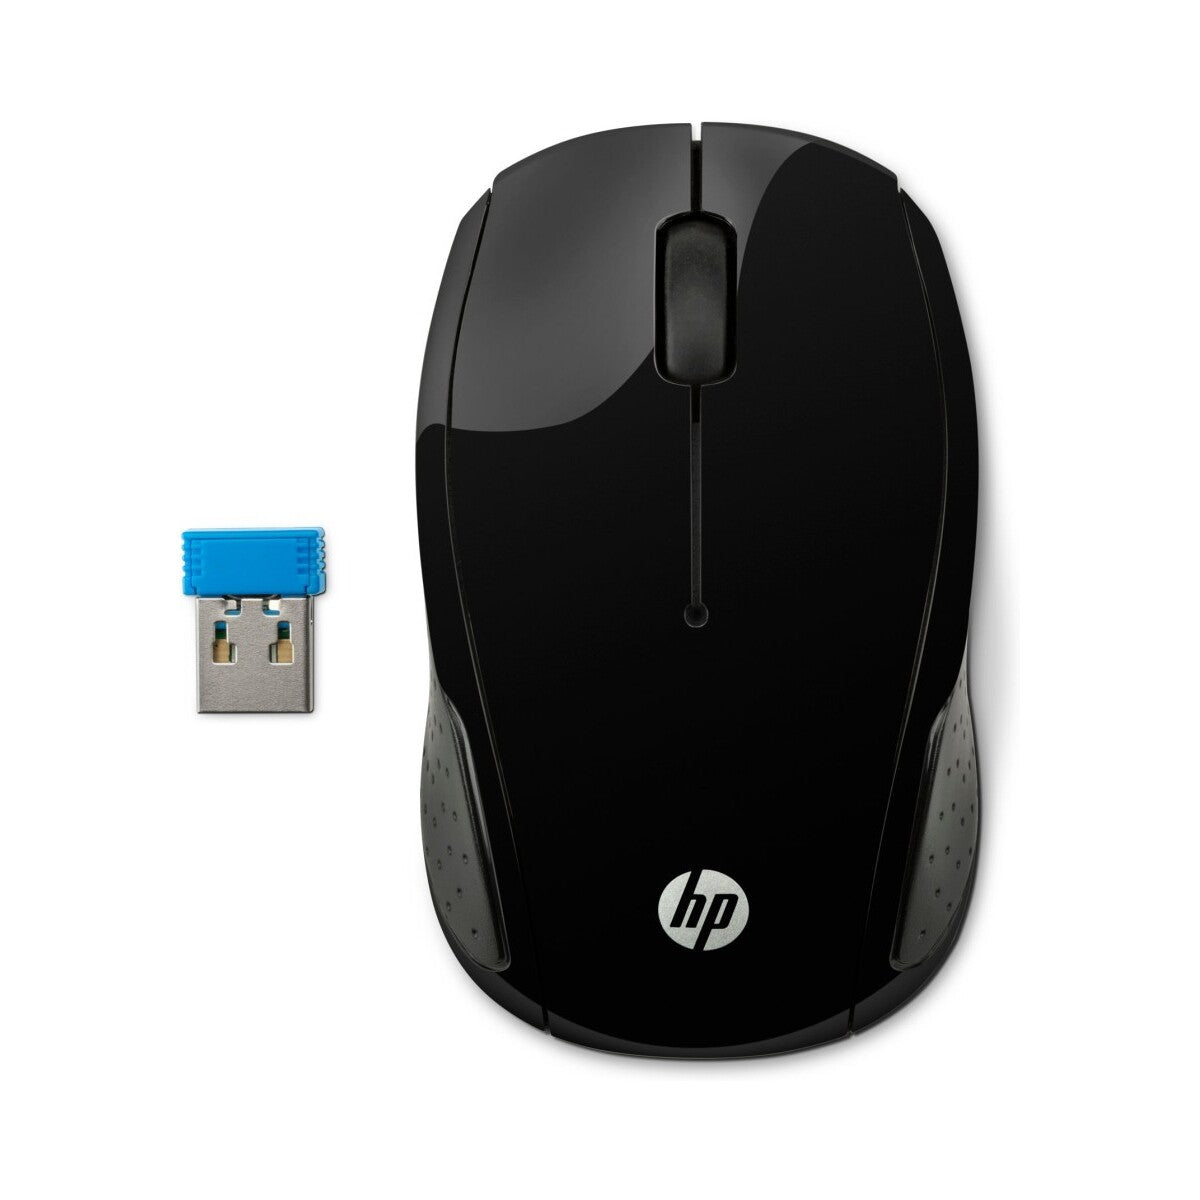 Bezdrátová myš HP 200 (X6W31AA)